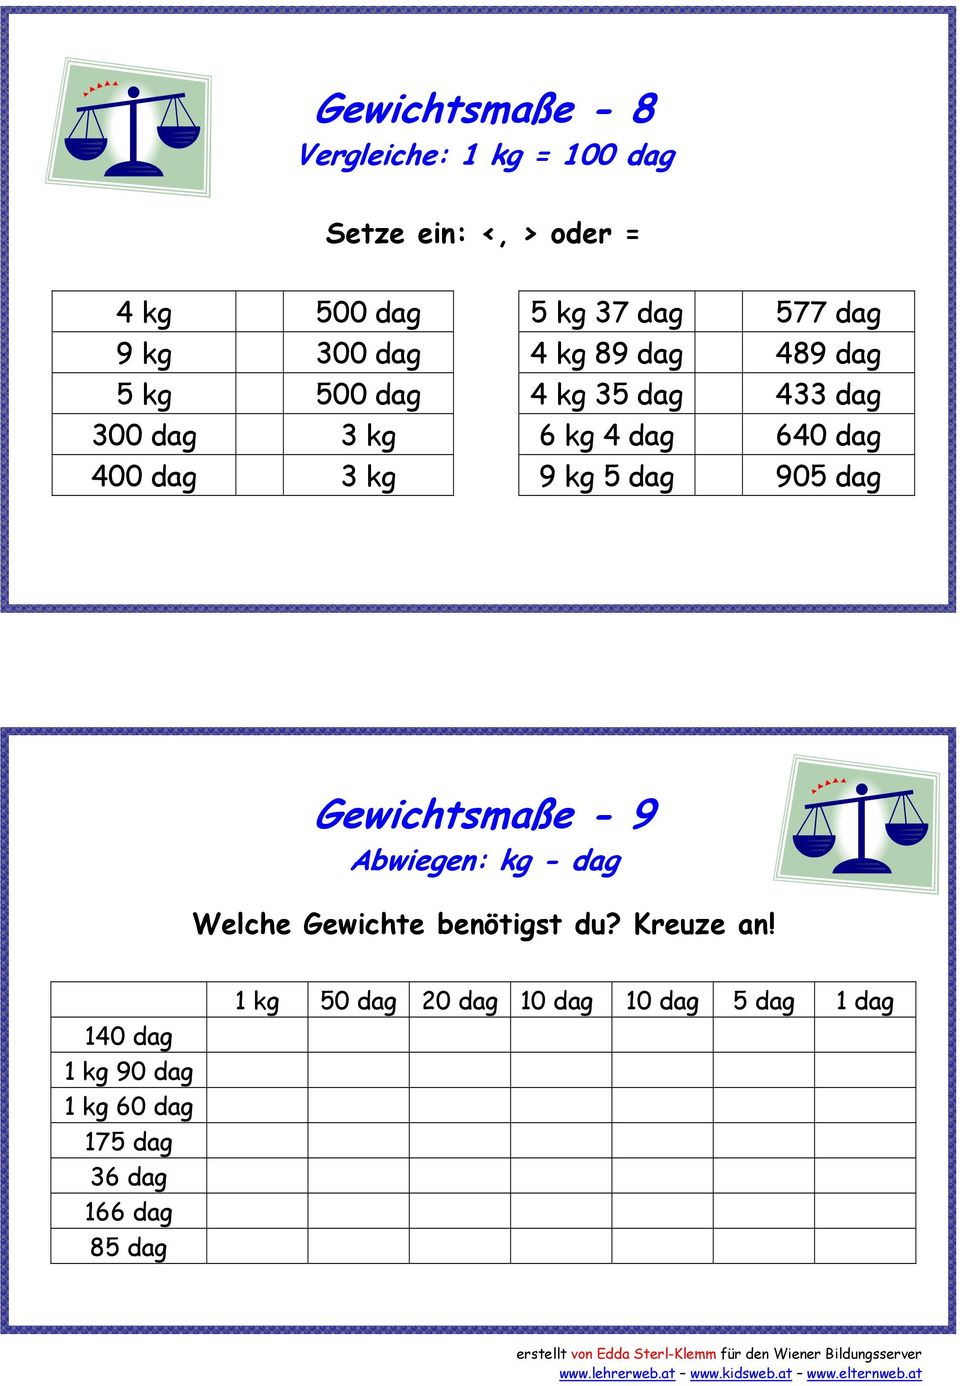 3 kg 9 kg 5 dag 905 dag Gewichtsmaße - 9 Abwiegen: kg - dag Welche Gewichte benötigst du? Kreuze an!